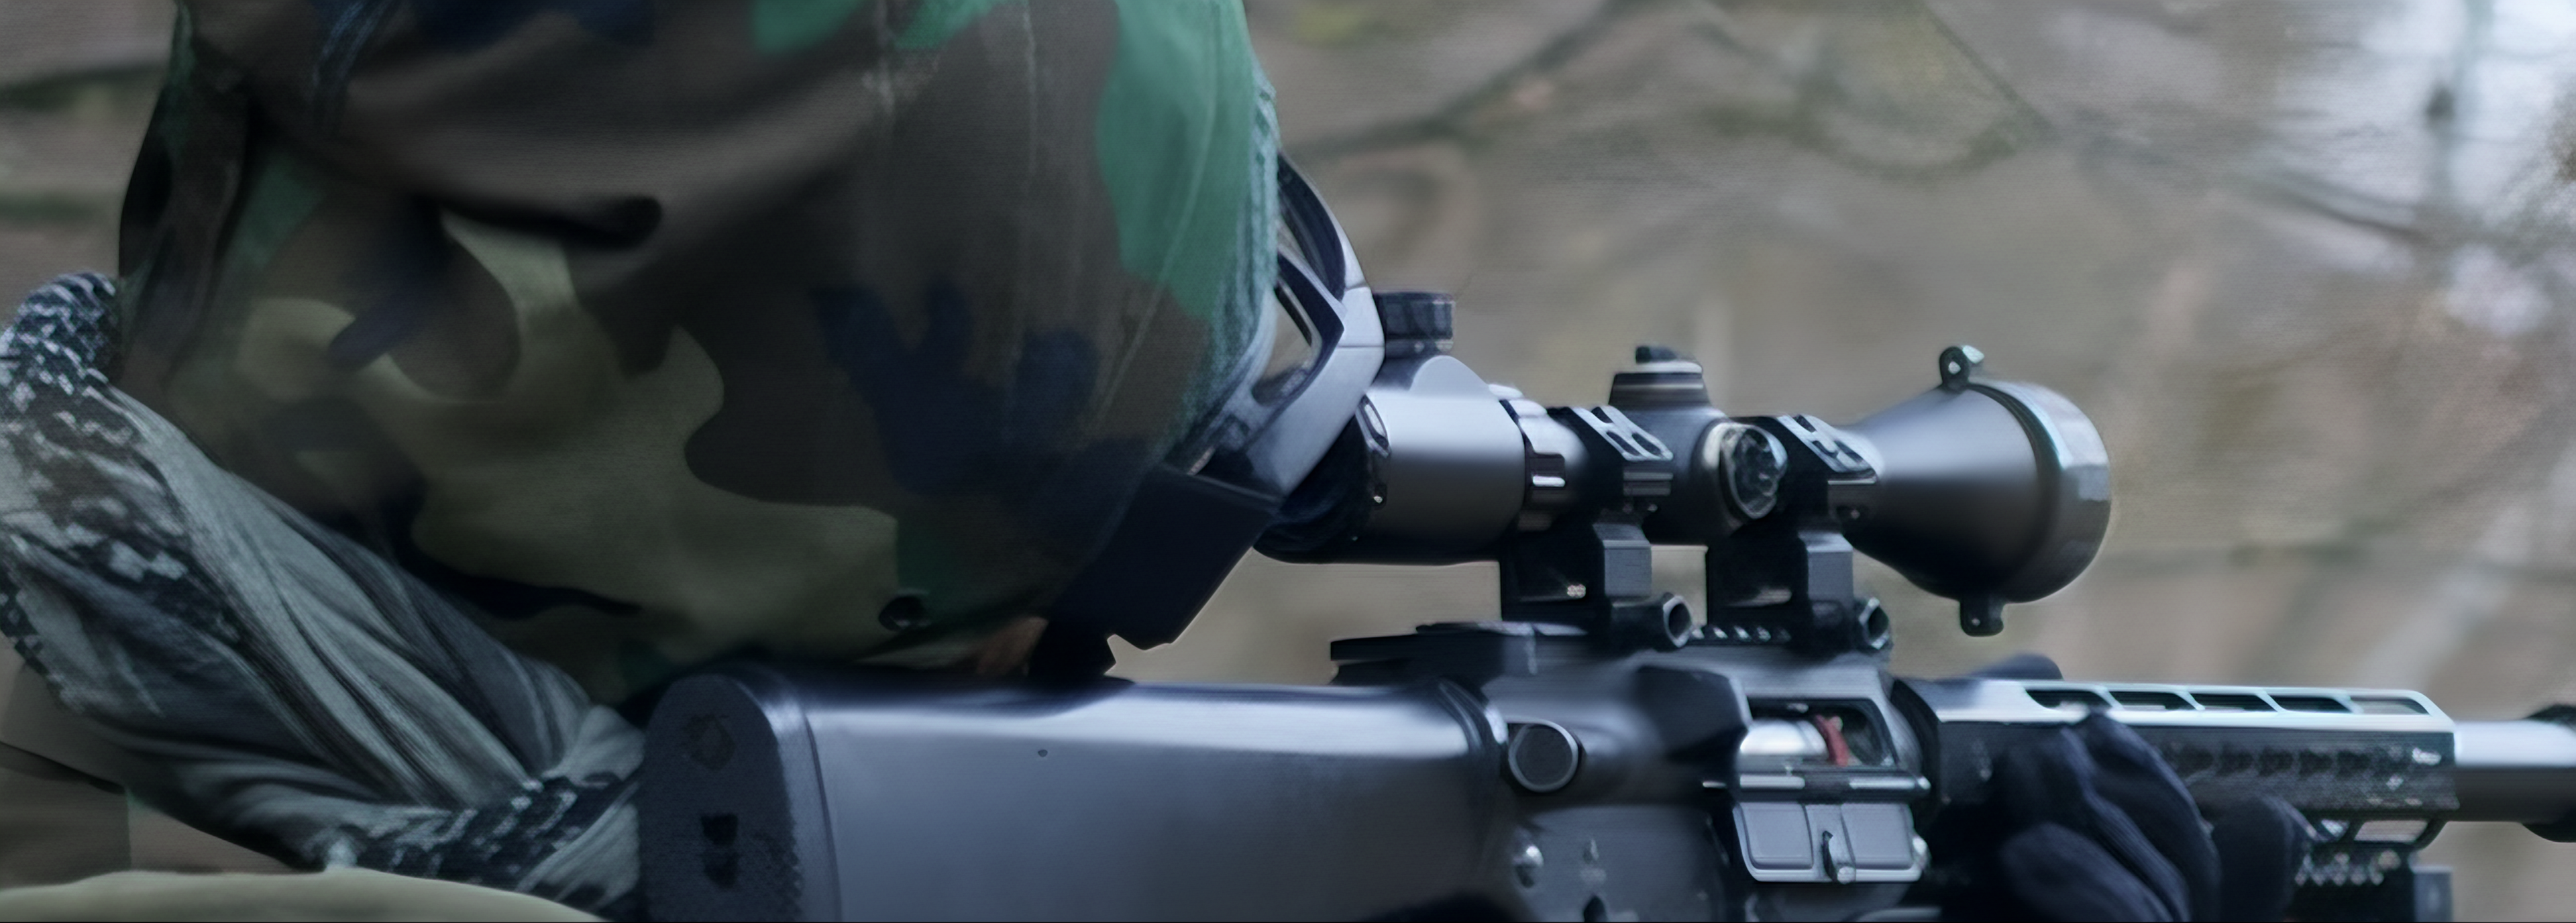 <img src="man-looking-through-scope.jpg" alt="Man focusing through a rifle scope hunting">